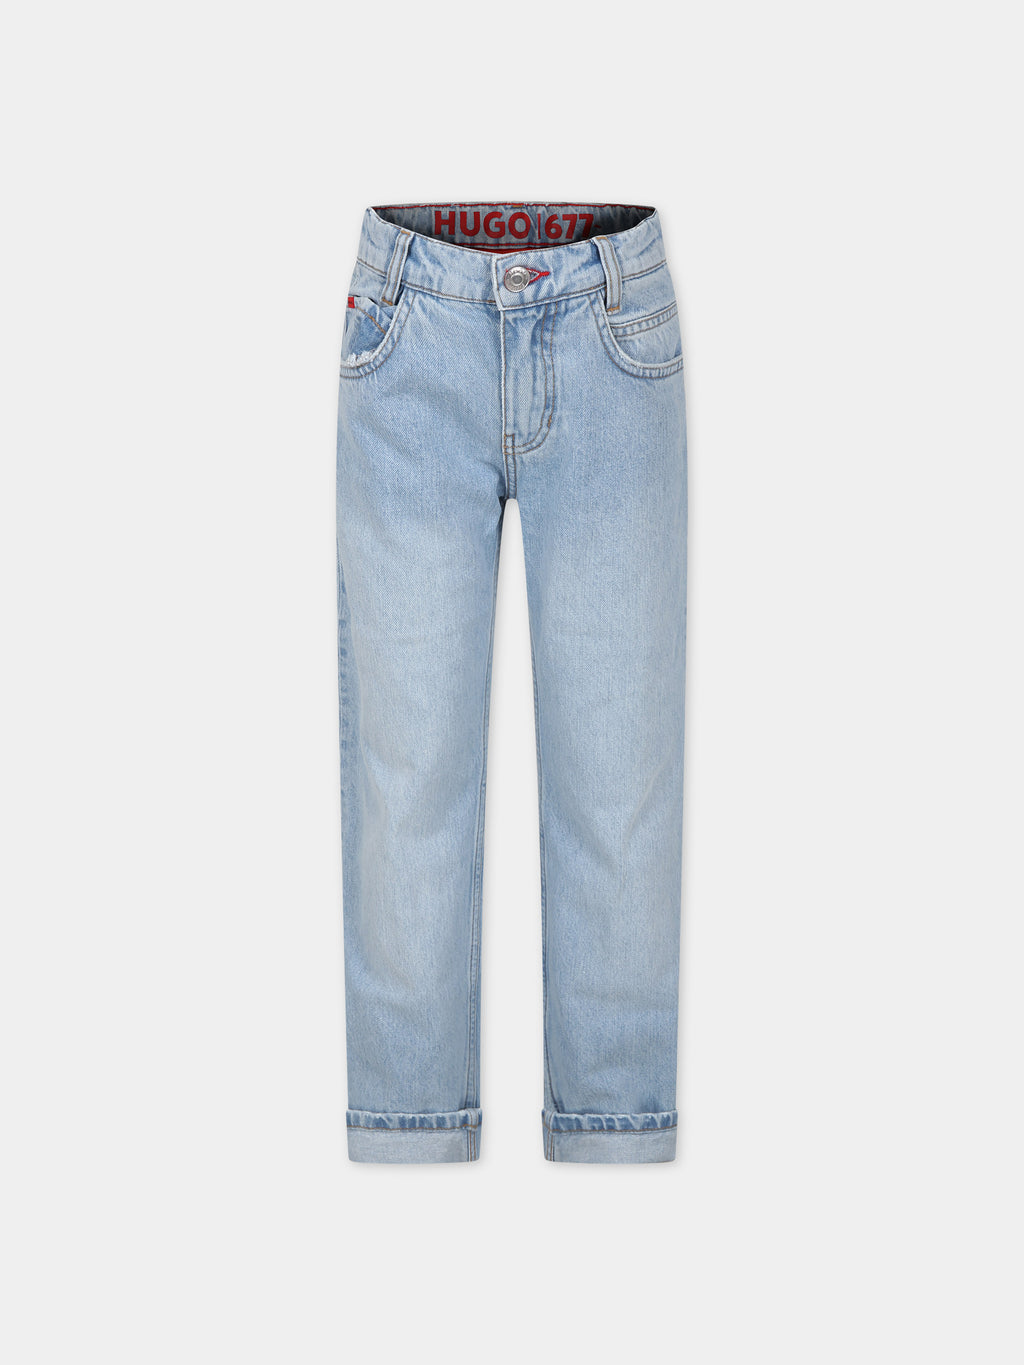 Denim jeans for boy with logo